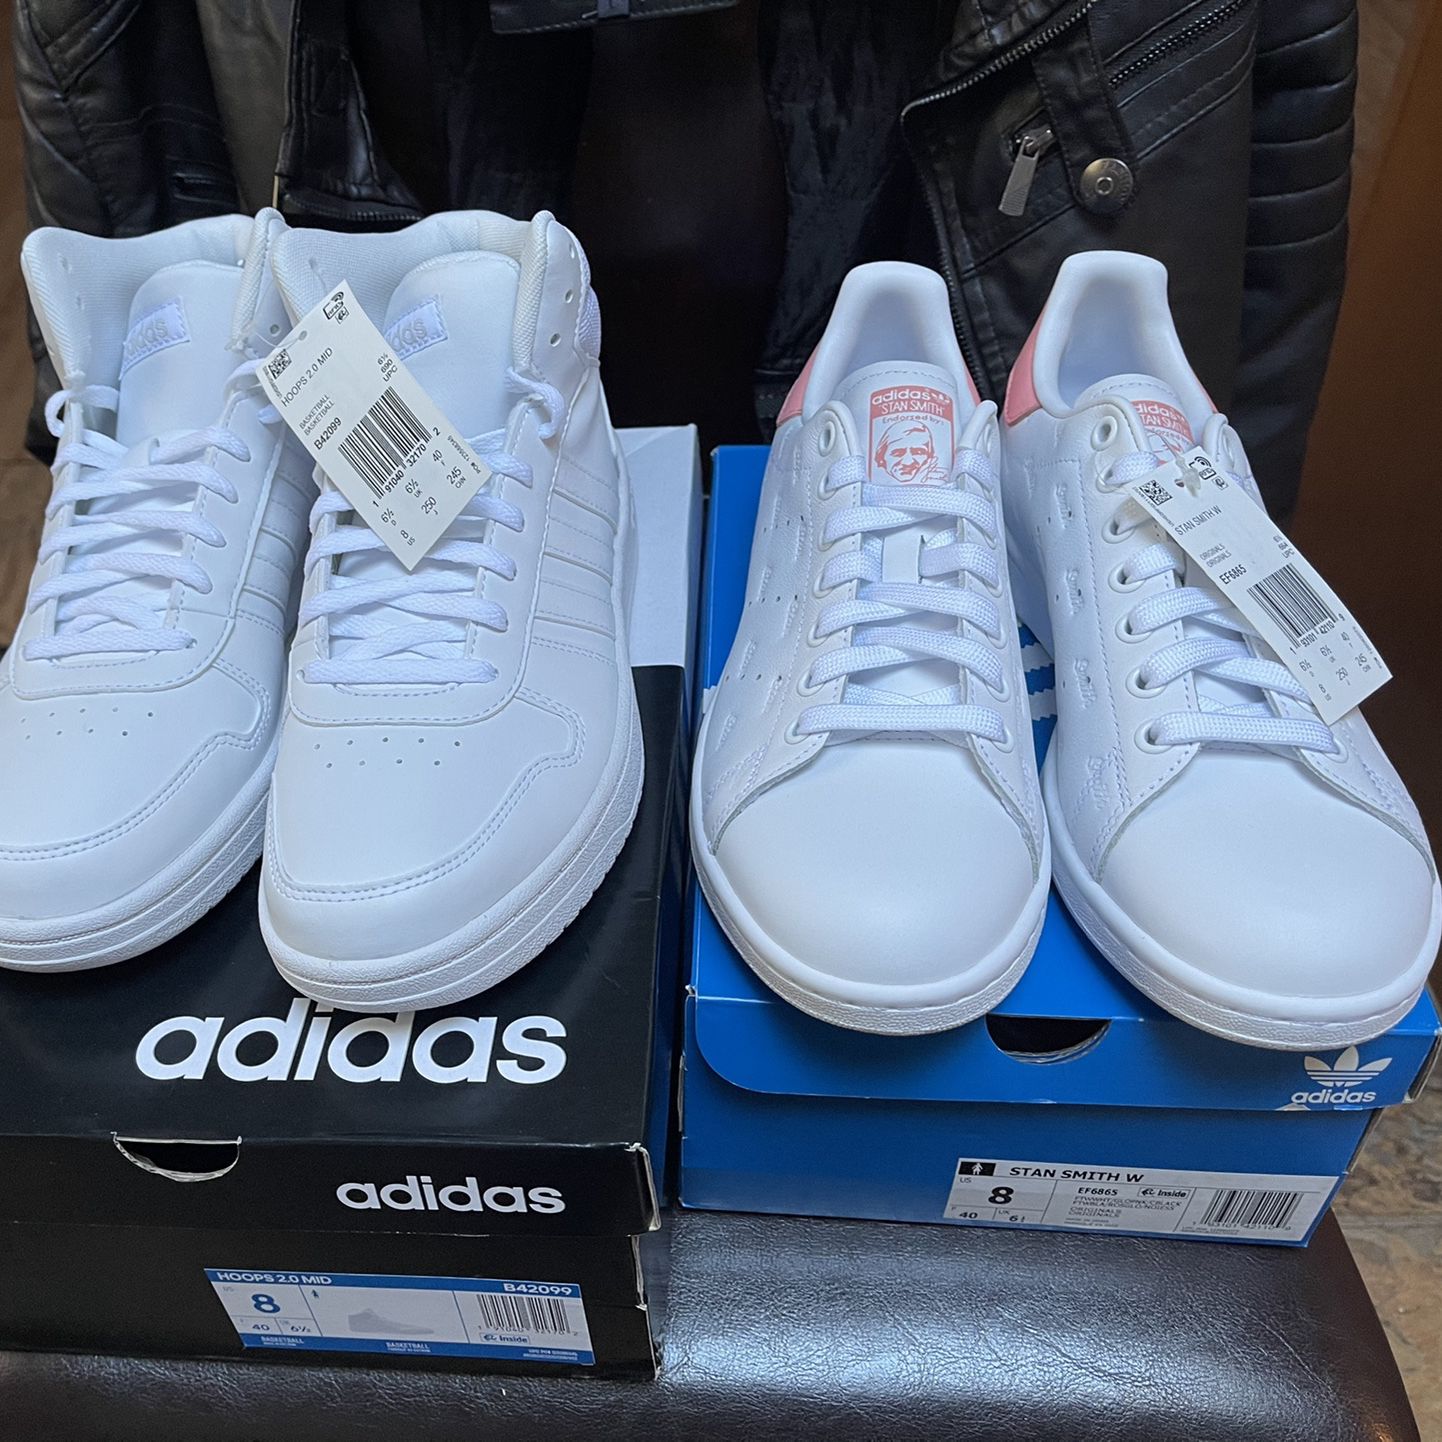 Two Pair Adidas Women Sz 8 Sneakers - $35 ea